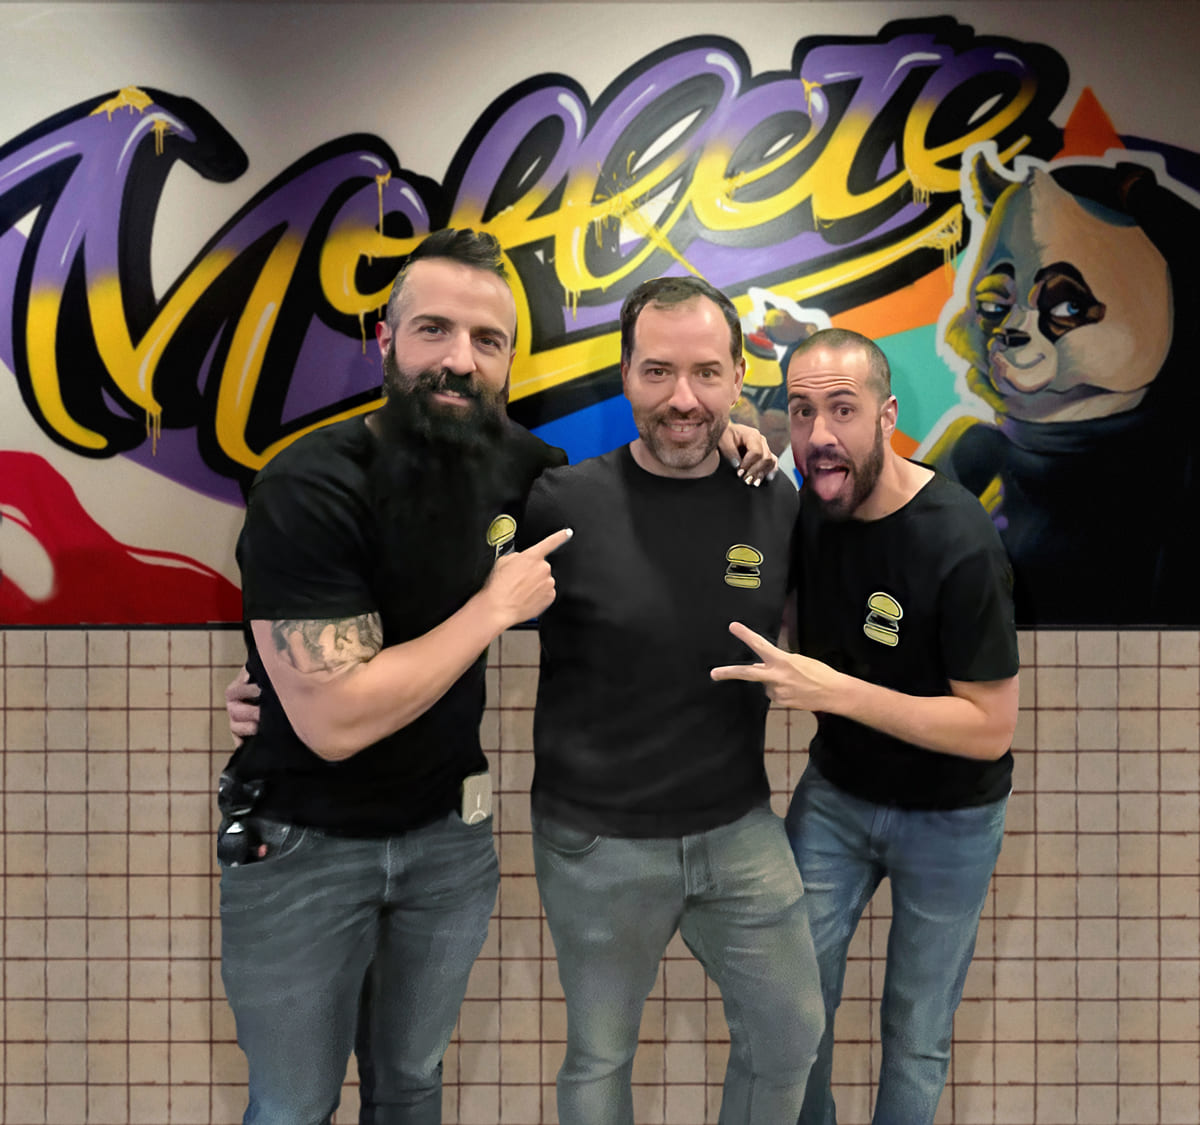 The three founders of Moflete by Joe Burger, Jorge, David, and Rubén